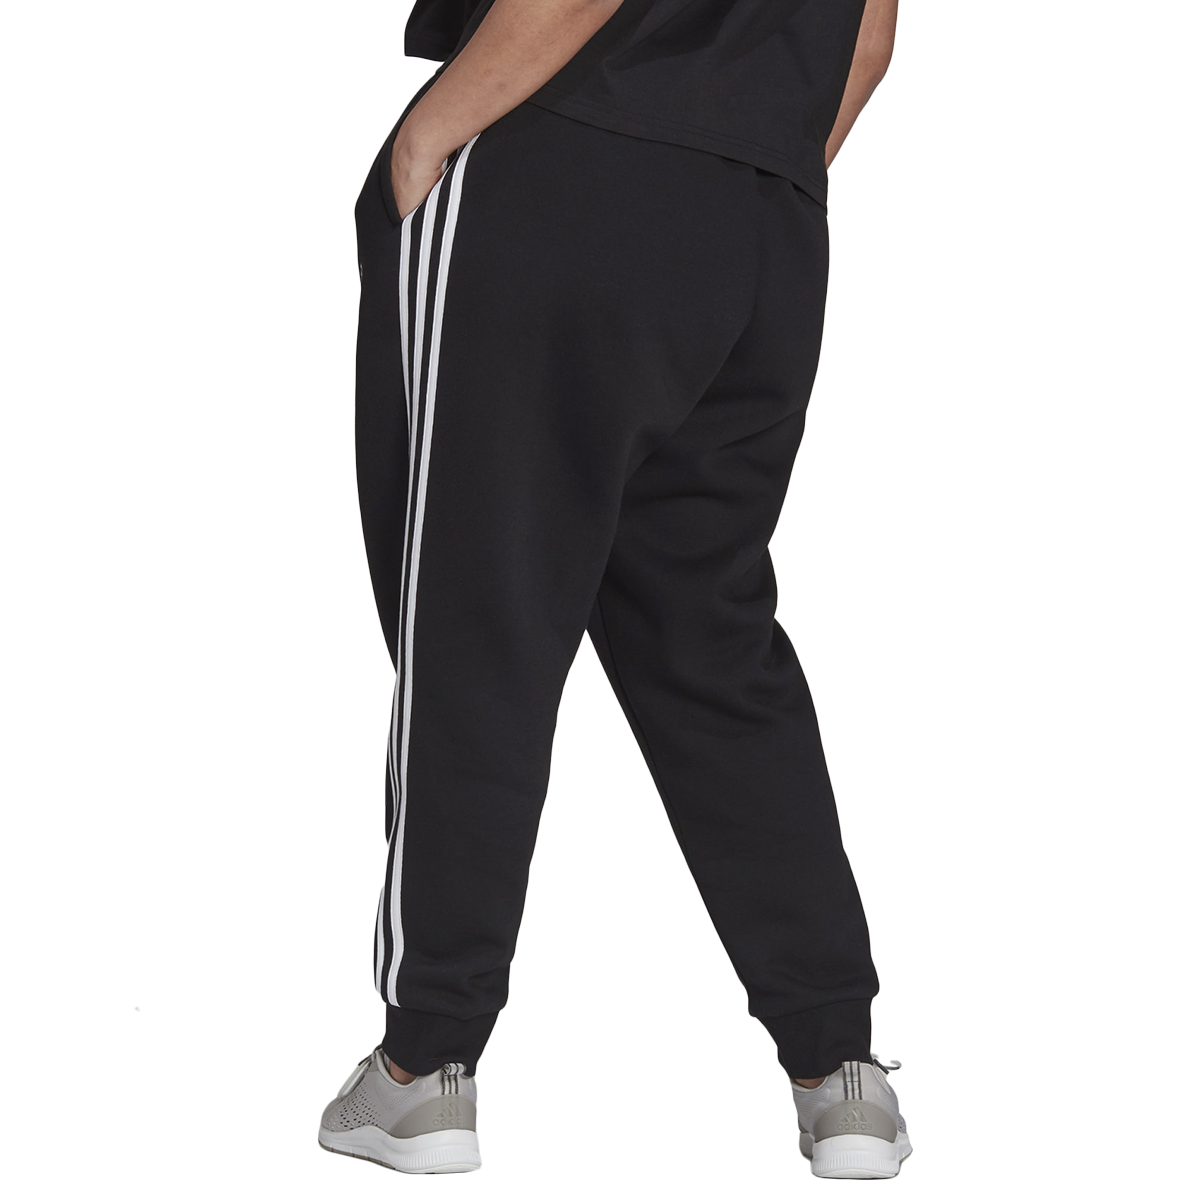 ADIDAS essentials 3-stripes high-waisted single jersey leggings 2024, Buy  ADIDAS Online